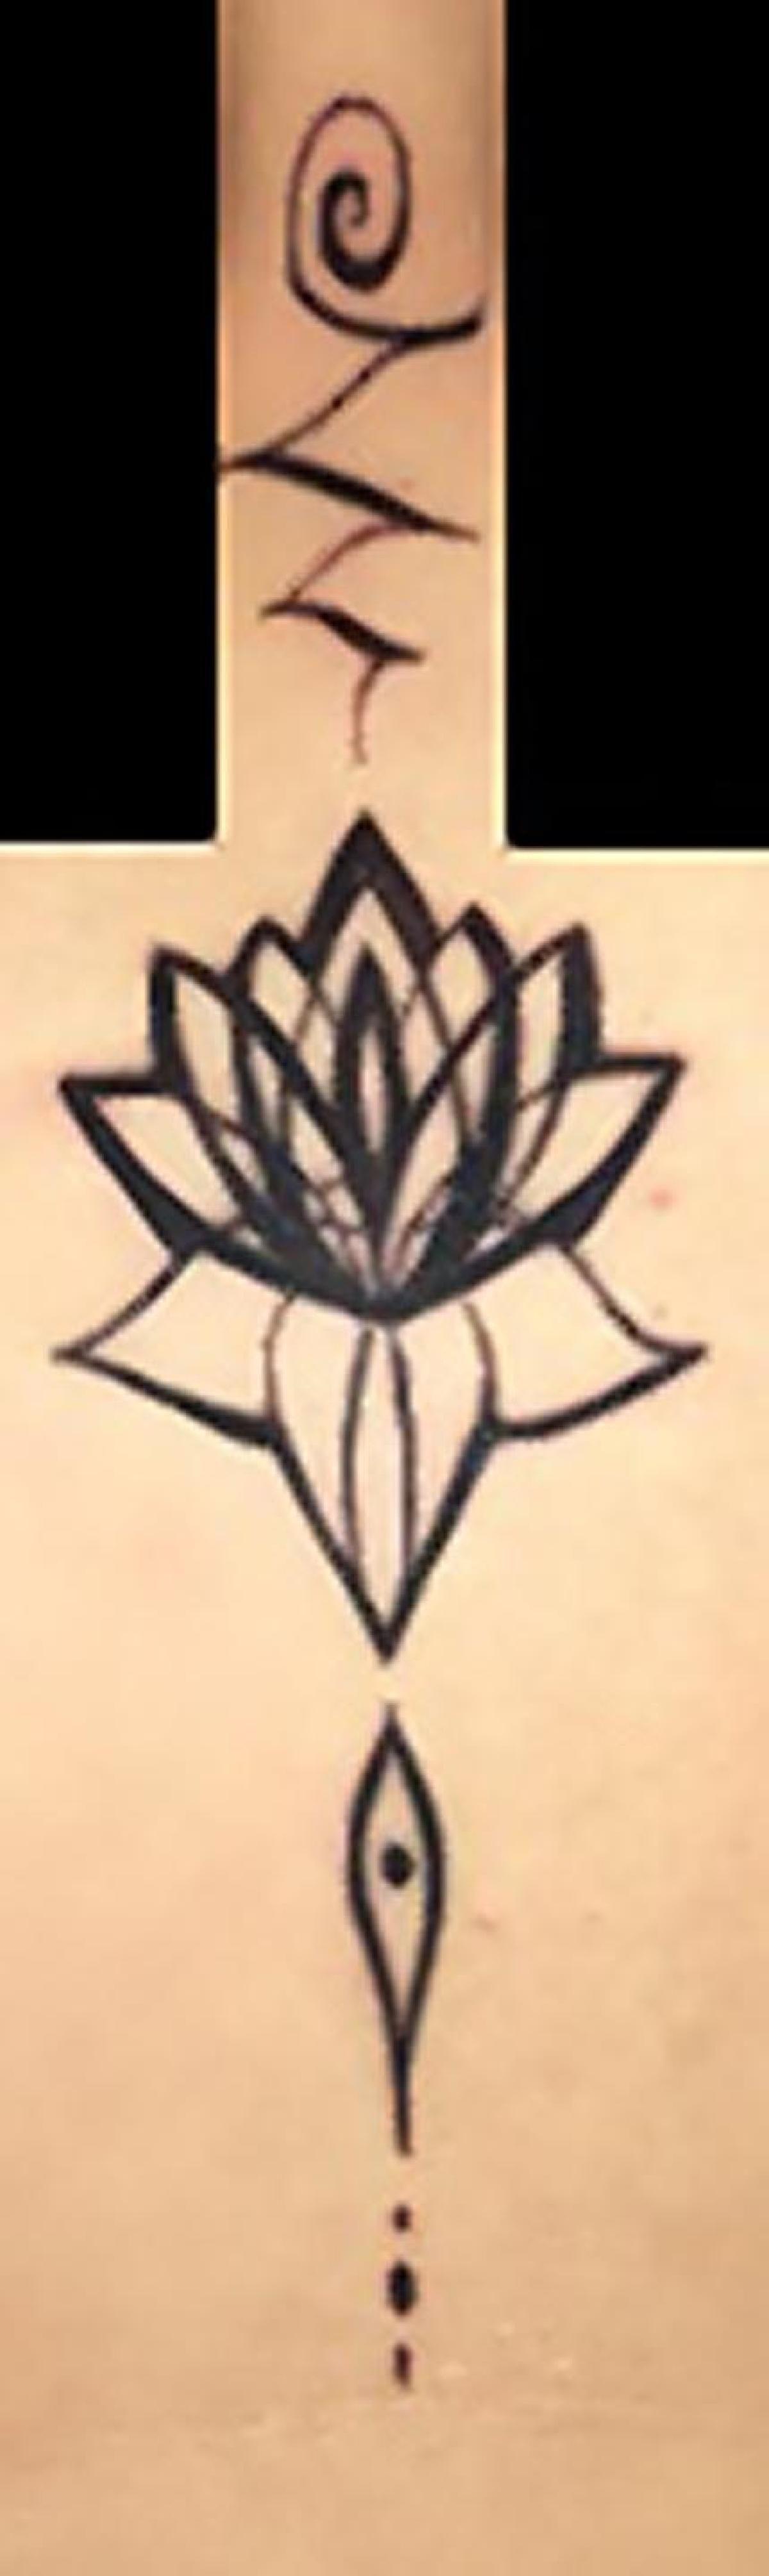 Corinna Slusser has a large black flower tattoo (pictured) on her chest. (DCPI)